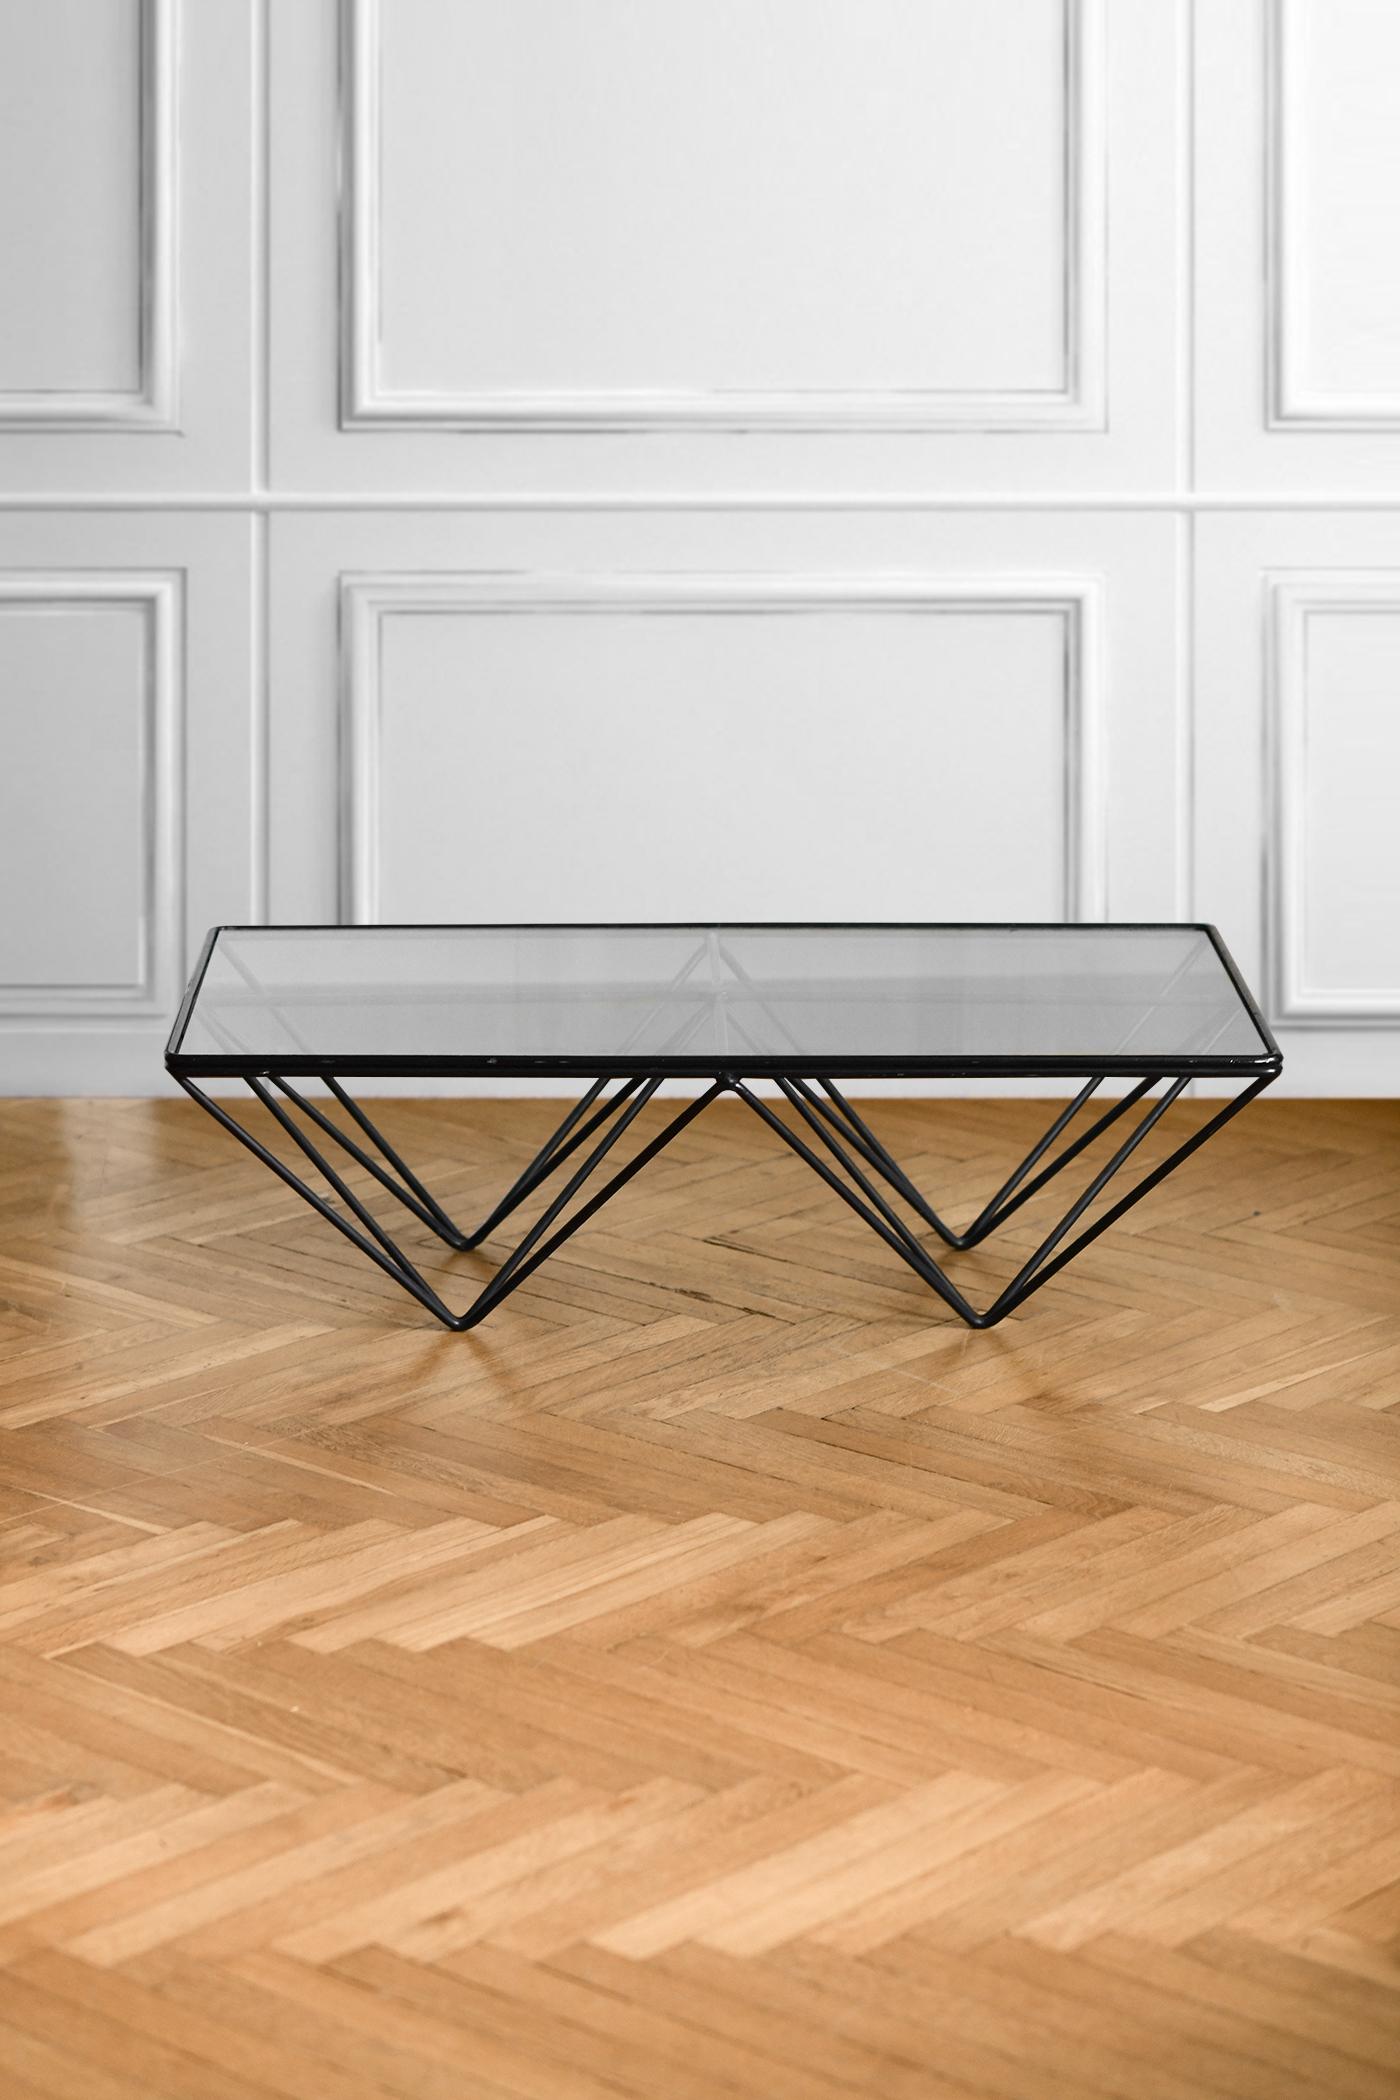 Alanda coffee table by Paolo Piva for B&B Italia, 1980
Dimensions 120 W x 30.5 H x 60 D cm